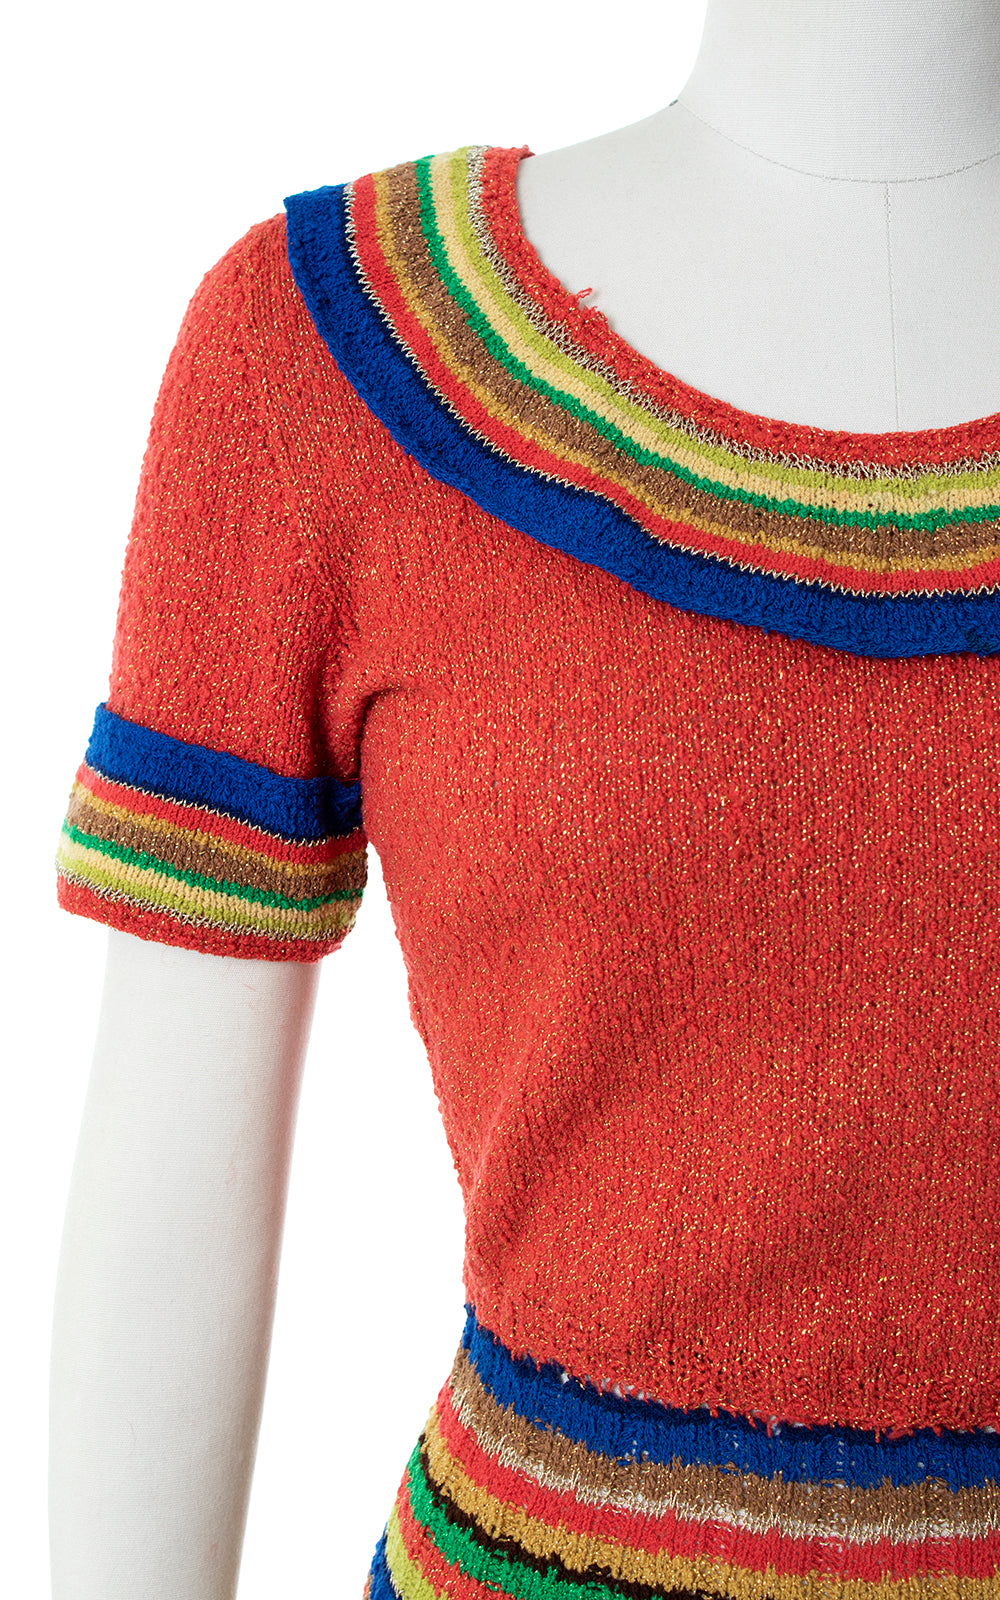 Vintage 1950s 50s Metallic Striped Knit Sweater Dress Birthday Life Vintage